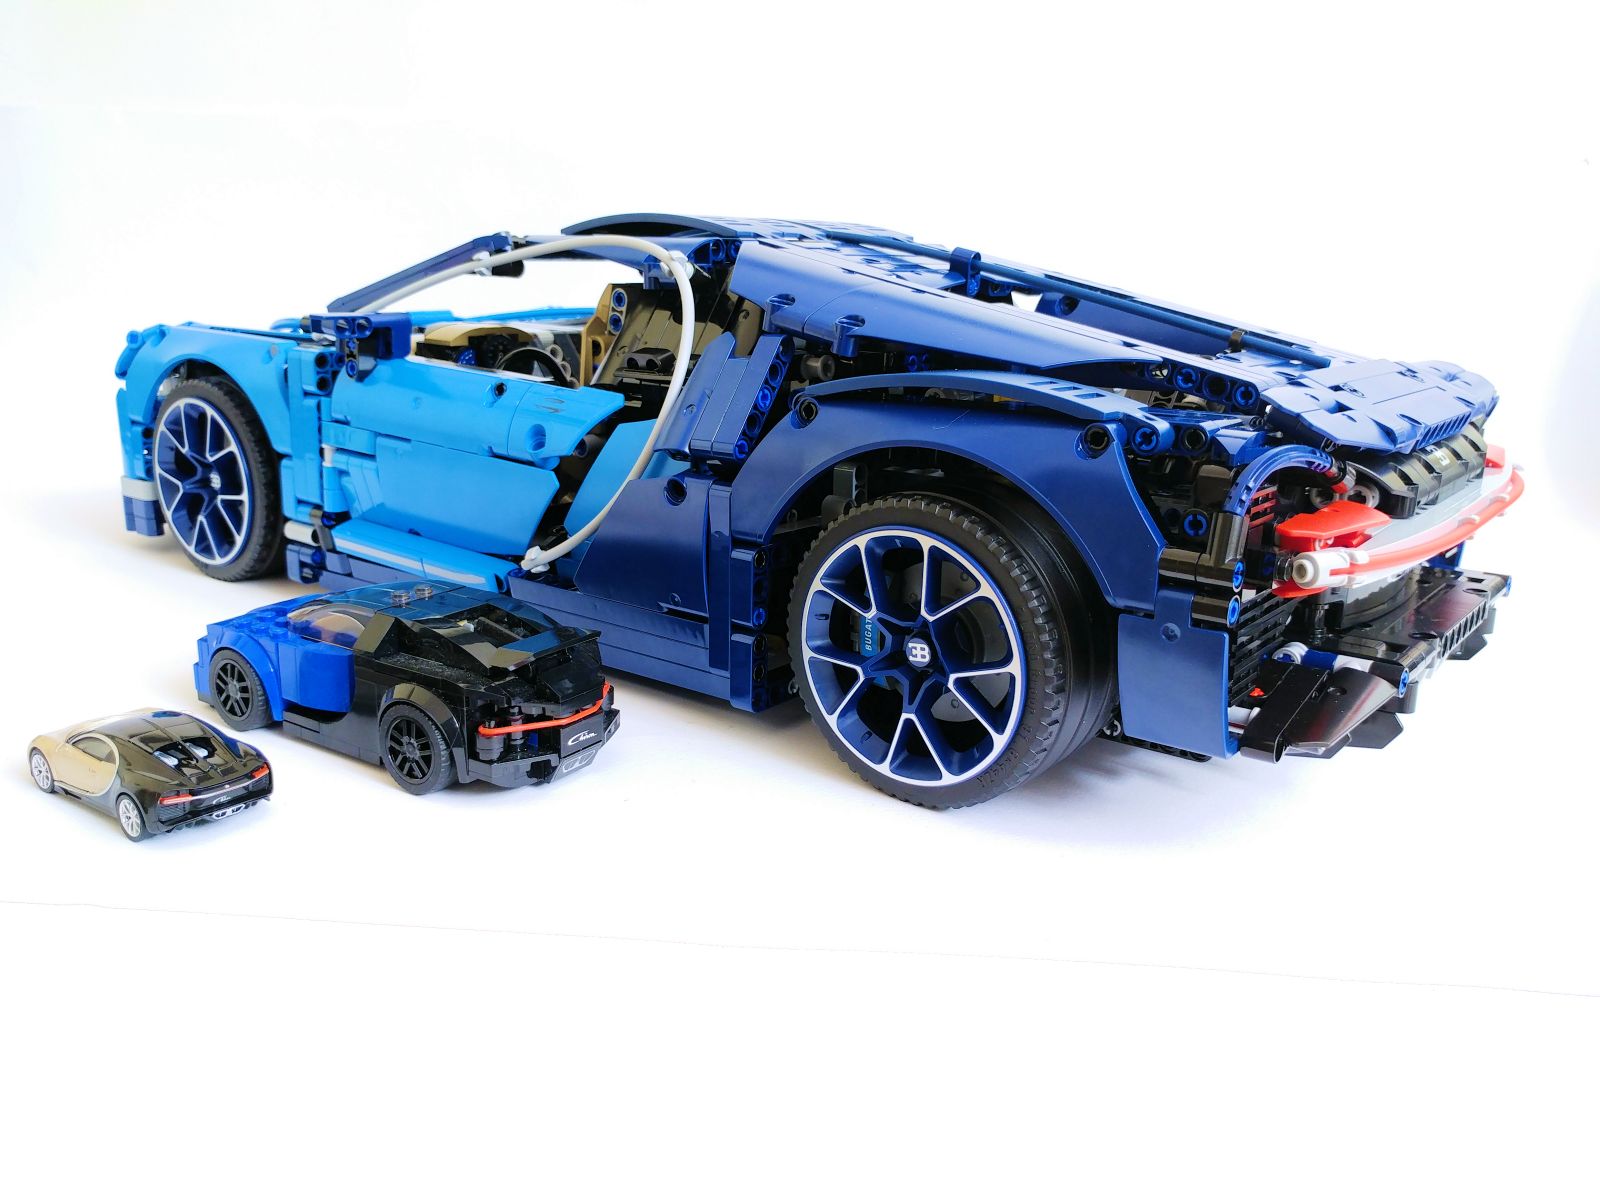 REVIEW: LEGO Technic Bugatti Chiron Car Set 42083 